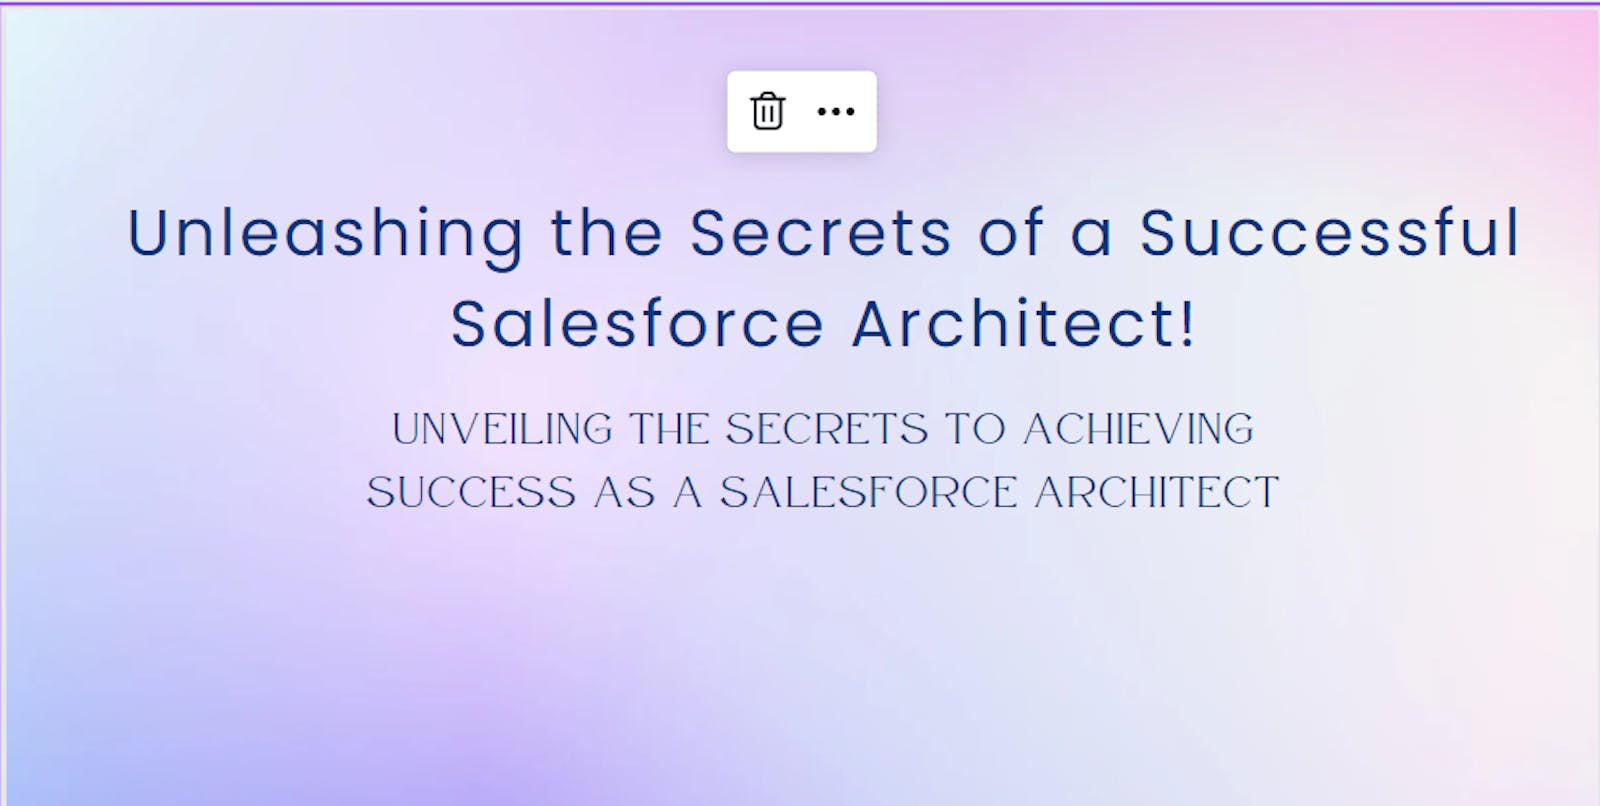 Unleashing the Secrets of a Successful Salesforce Architect!